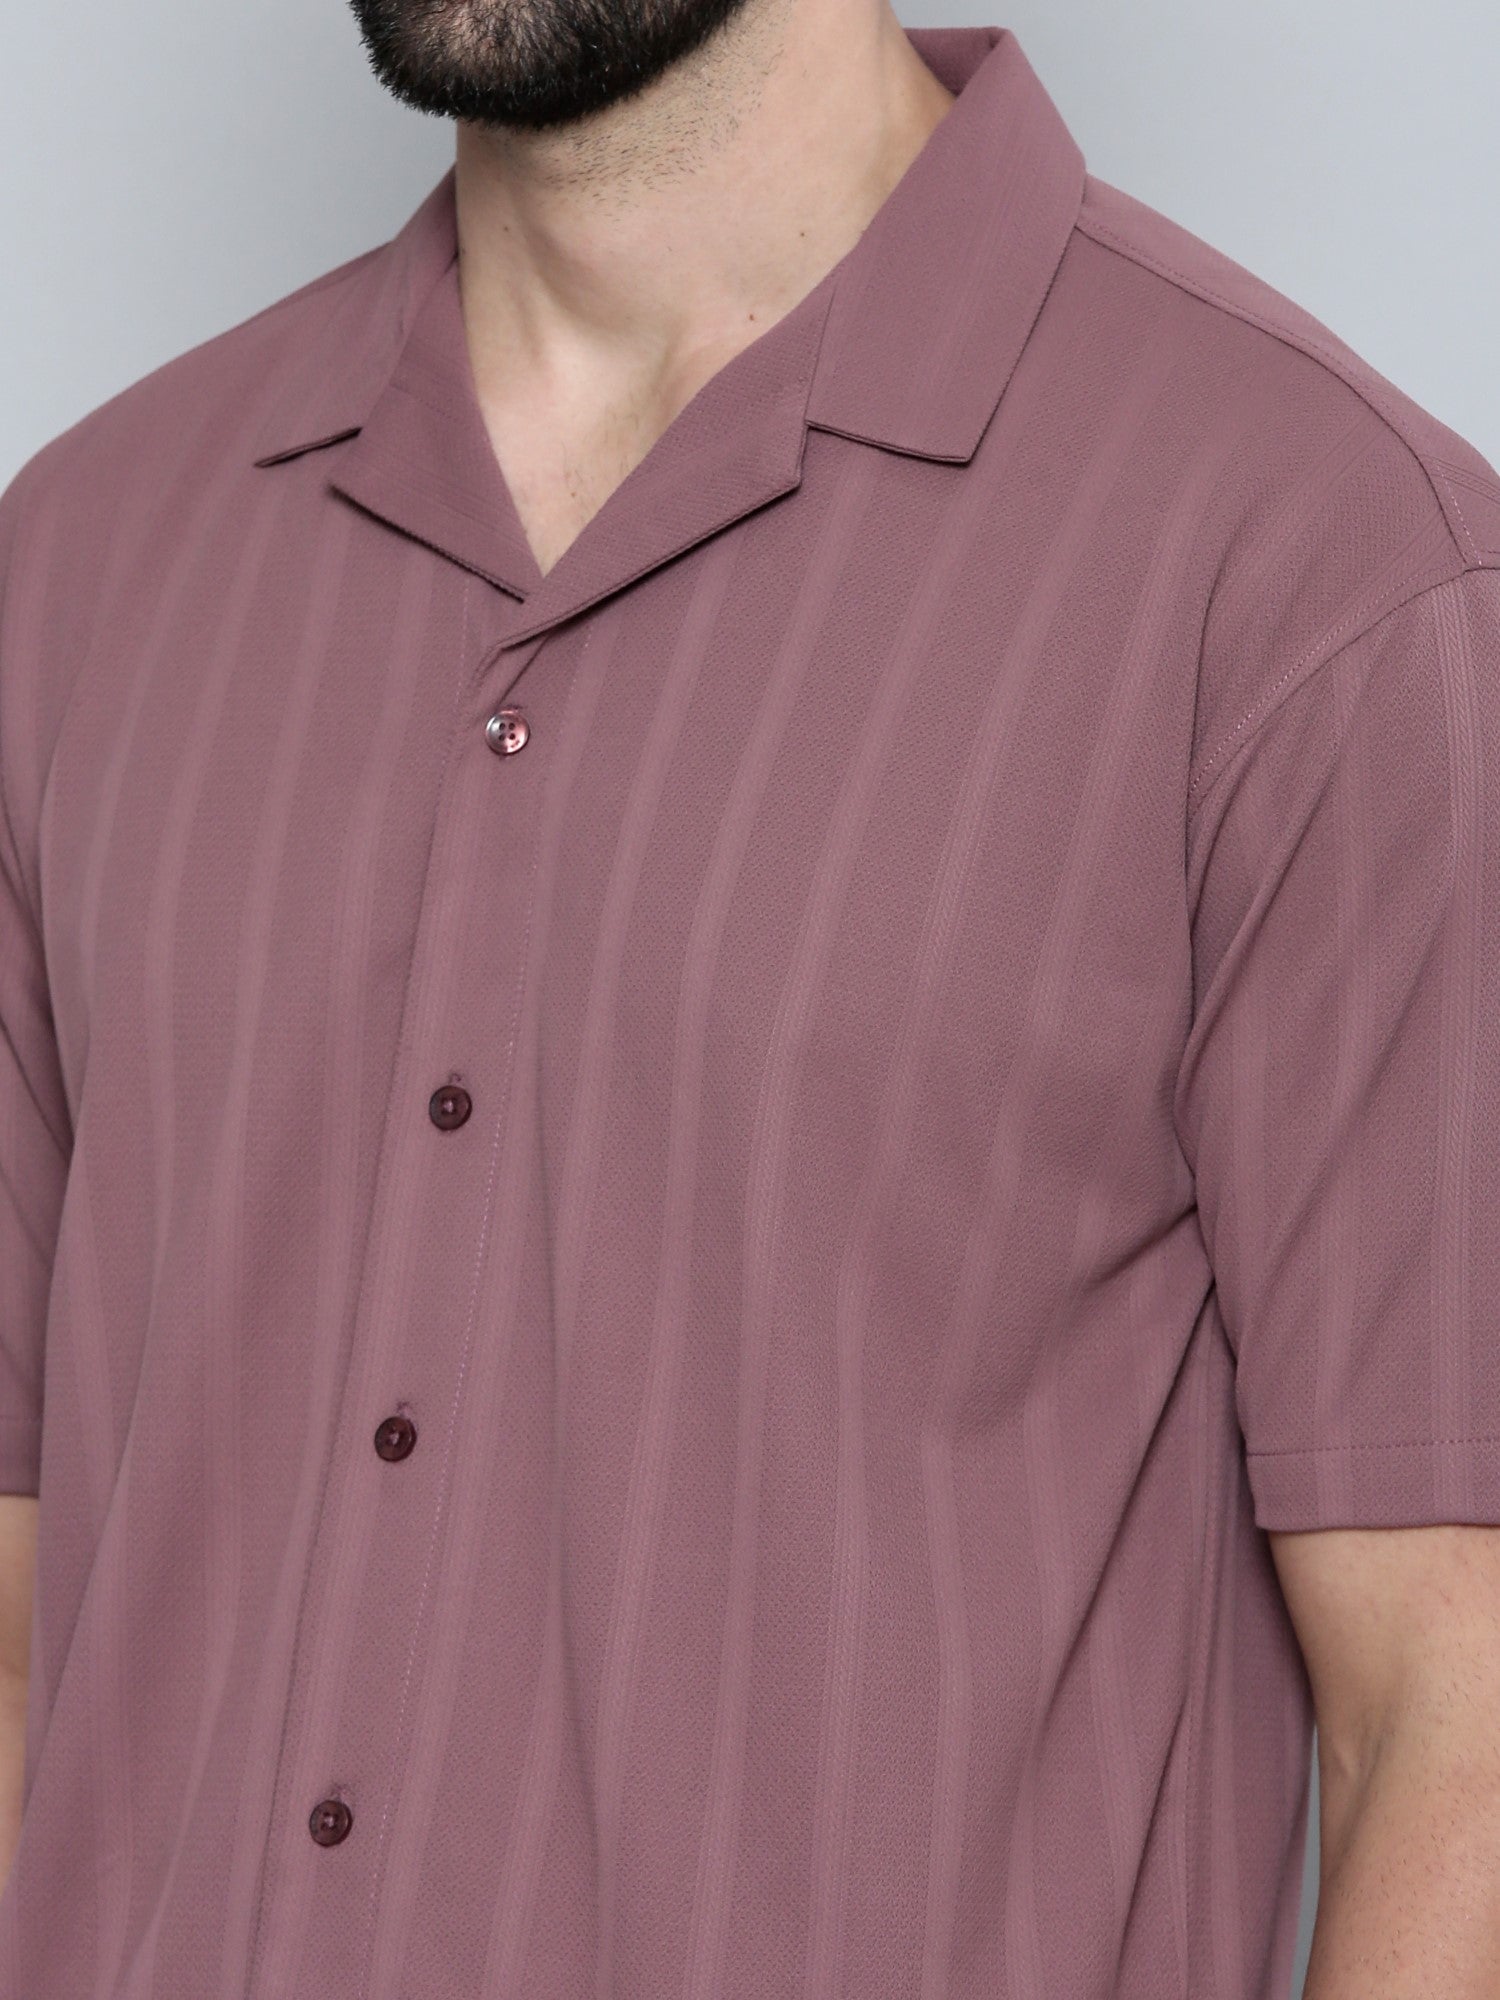 Texture Knit Onion Shirt